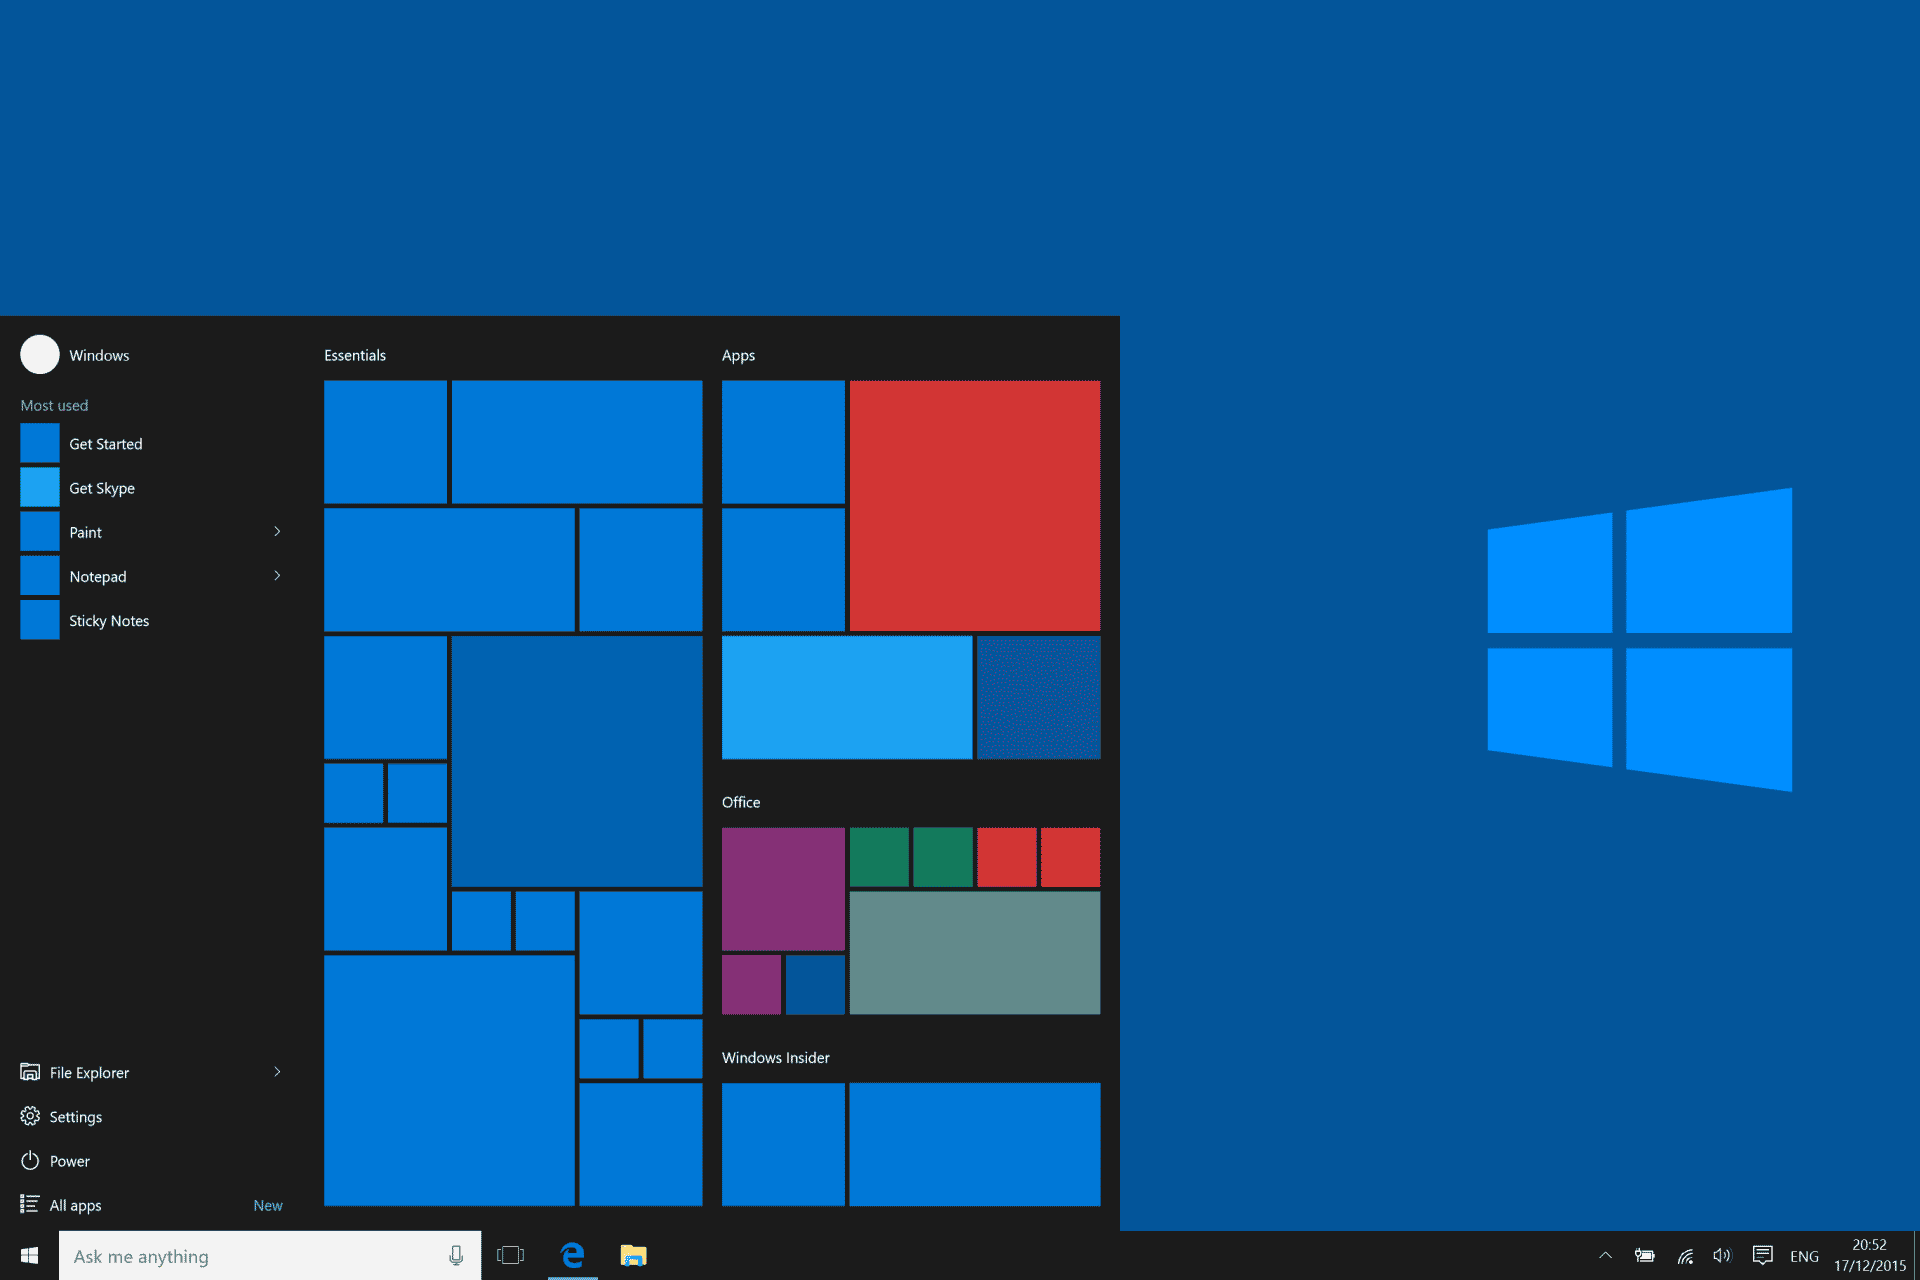 windows 10 free download